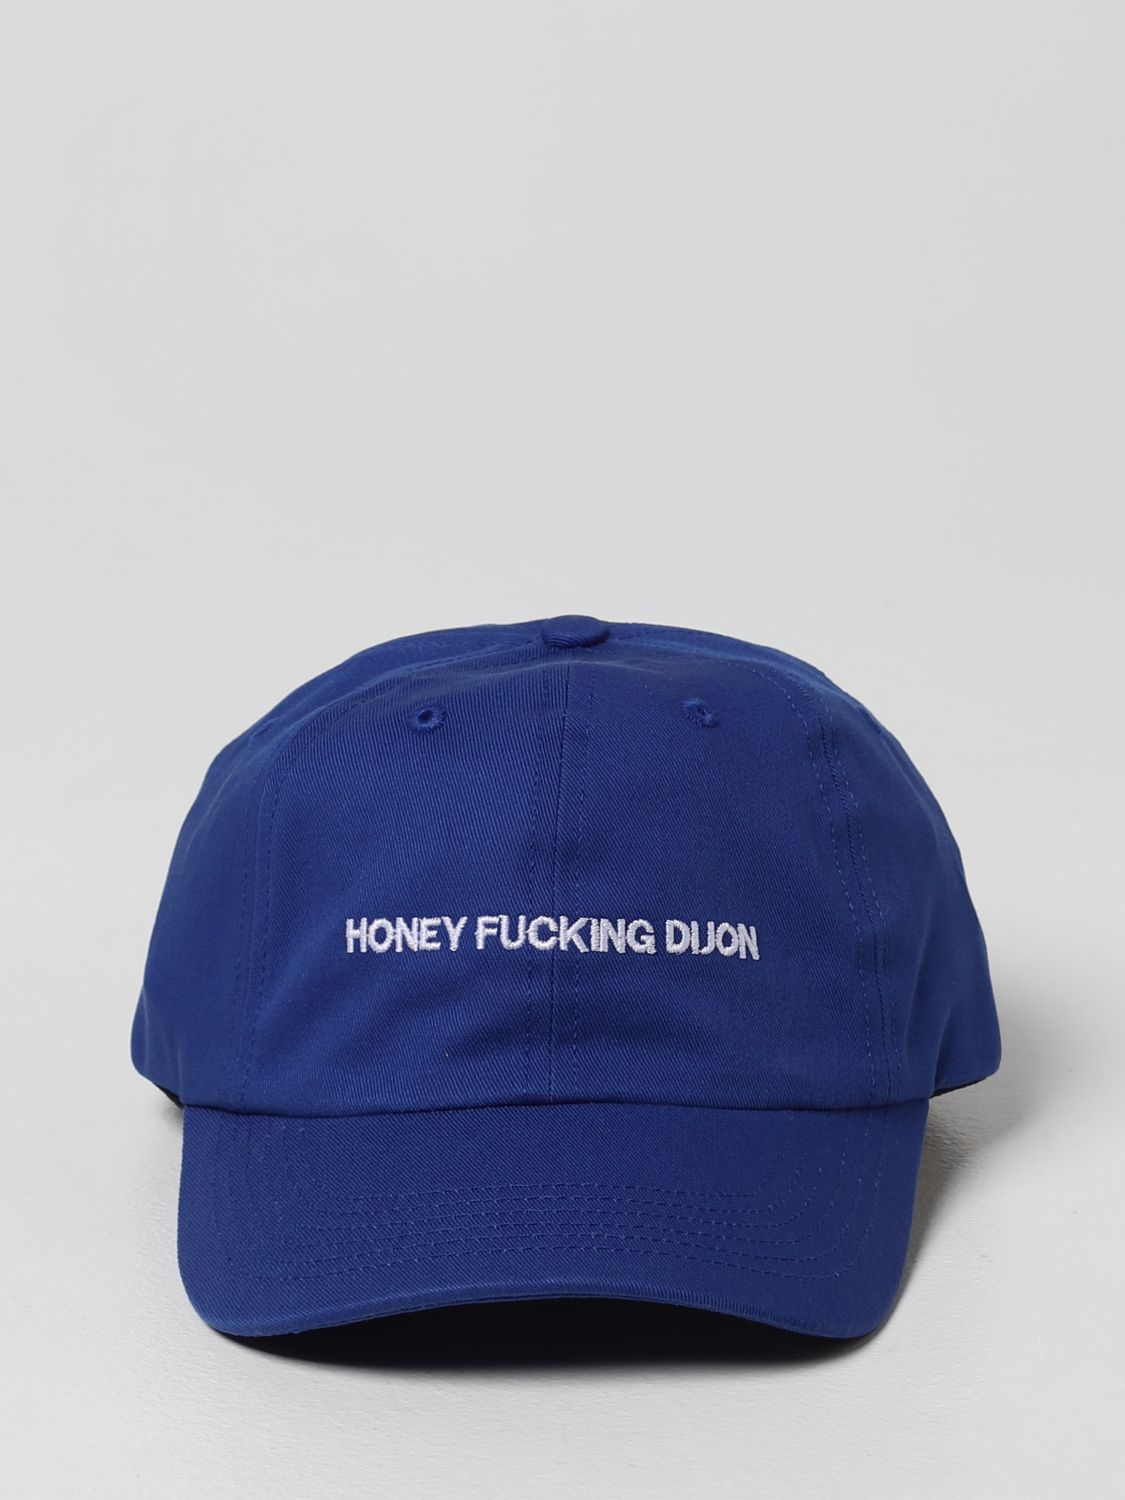 Hat Honey Fucking Dijon: Honey Fucking Dijon hat for man blue 2